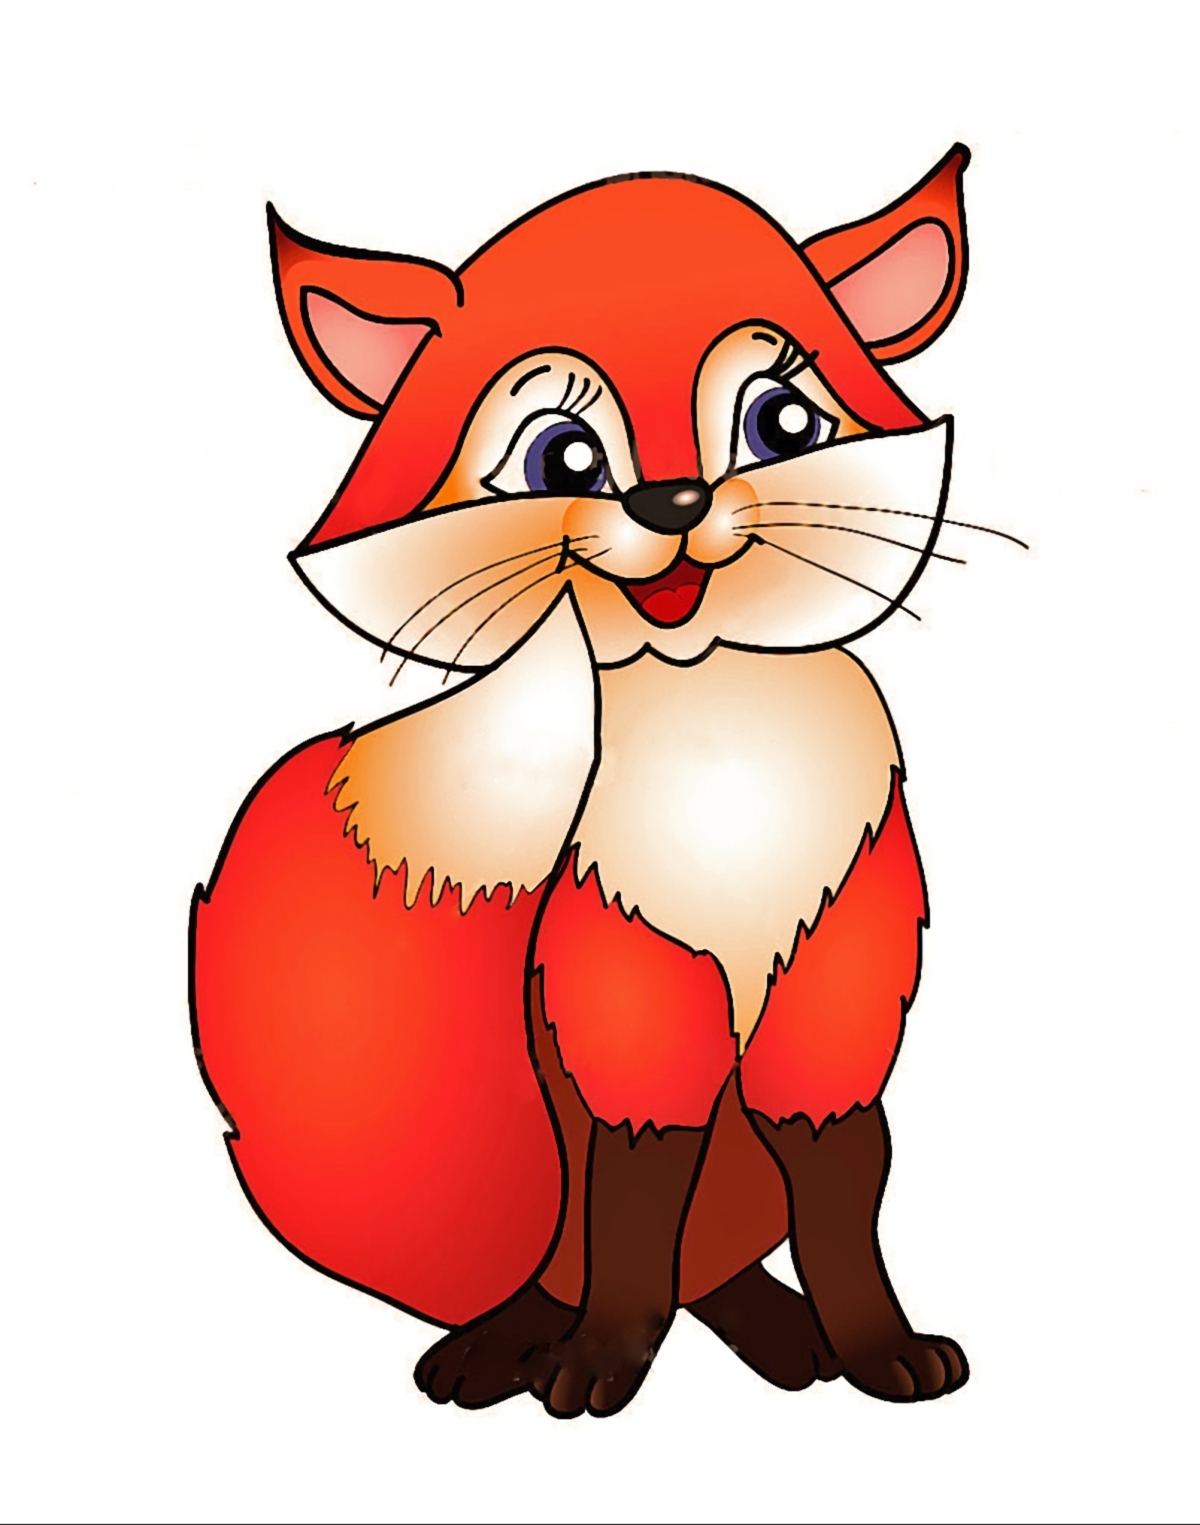 00-vixen-fox-cartoon-21-07-13.jpg